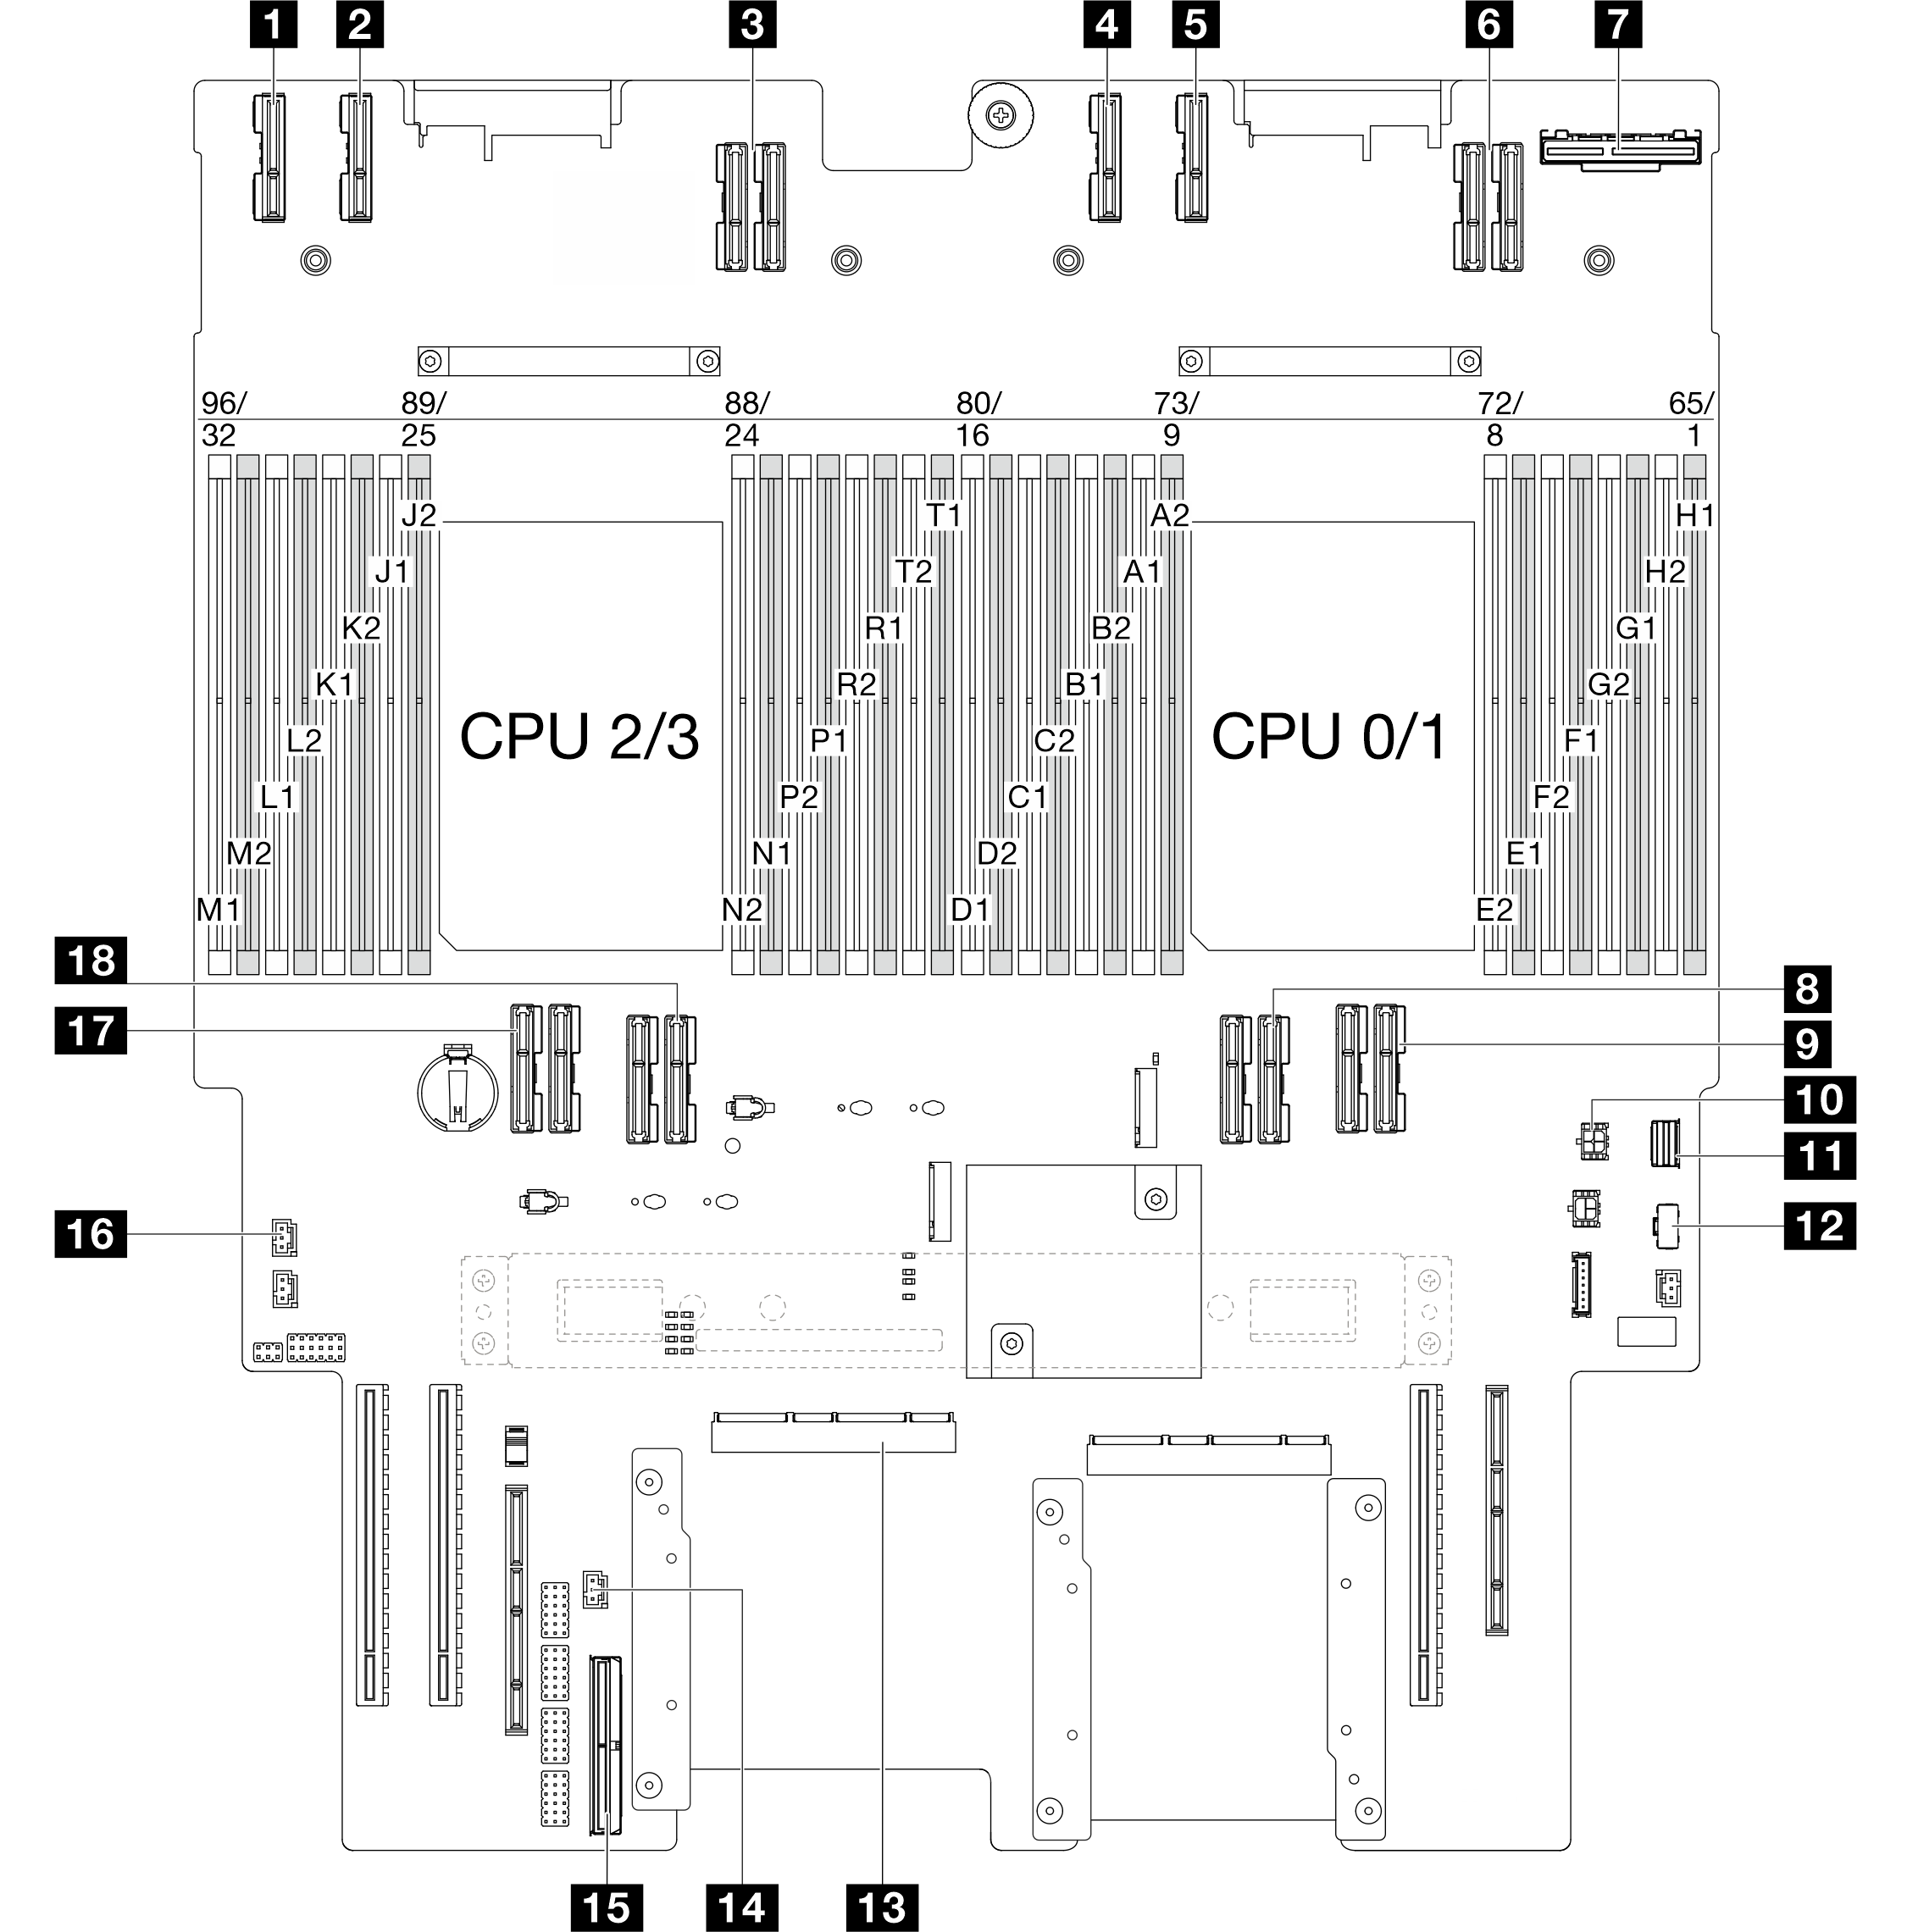 Lower processor board (MB) connectors